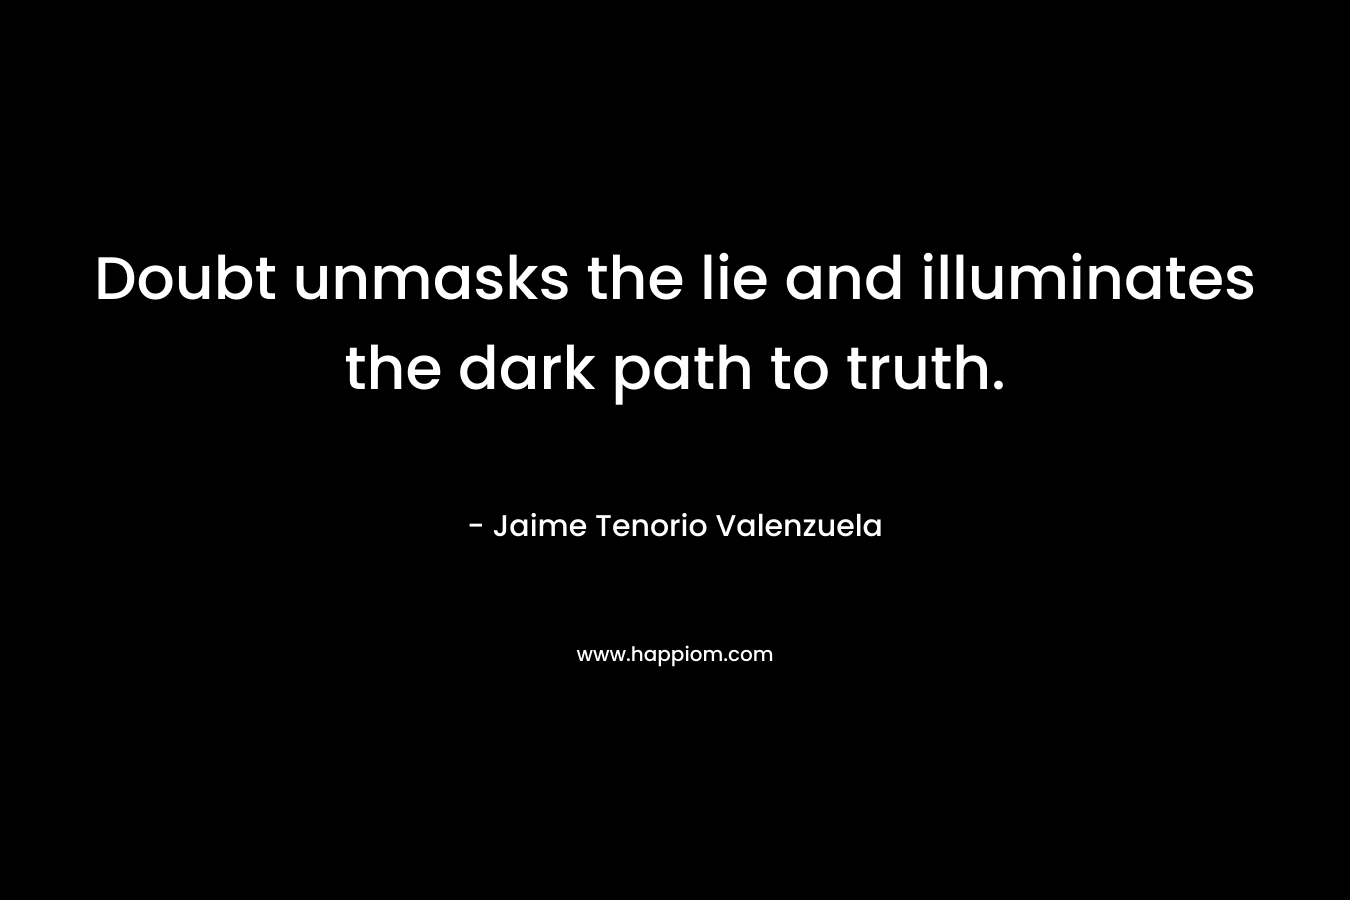 Doubt unmasks the lie and illuminates the dark path to truth. – Jaime Tenorio Valenzuela